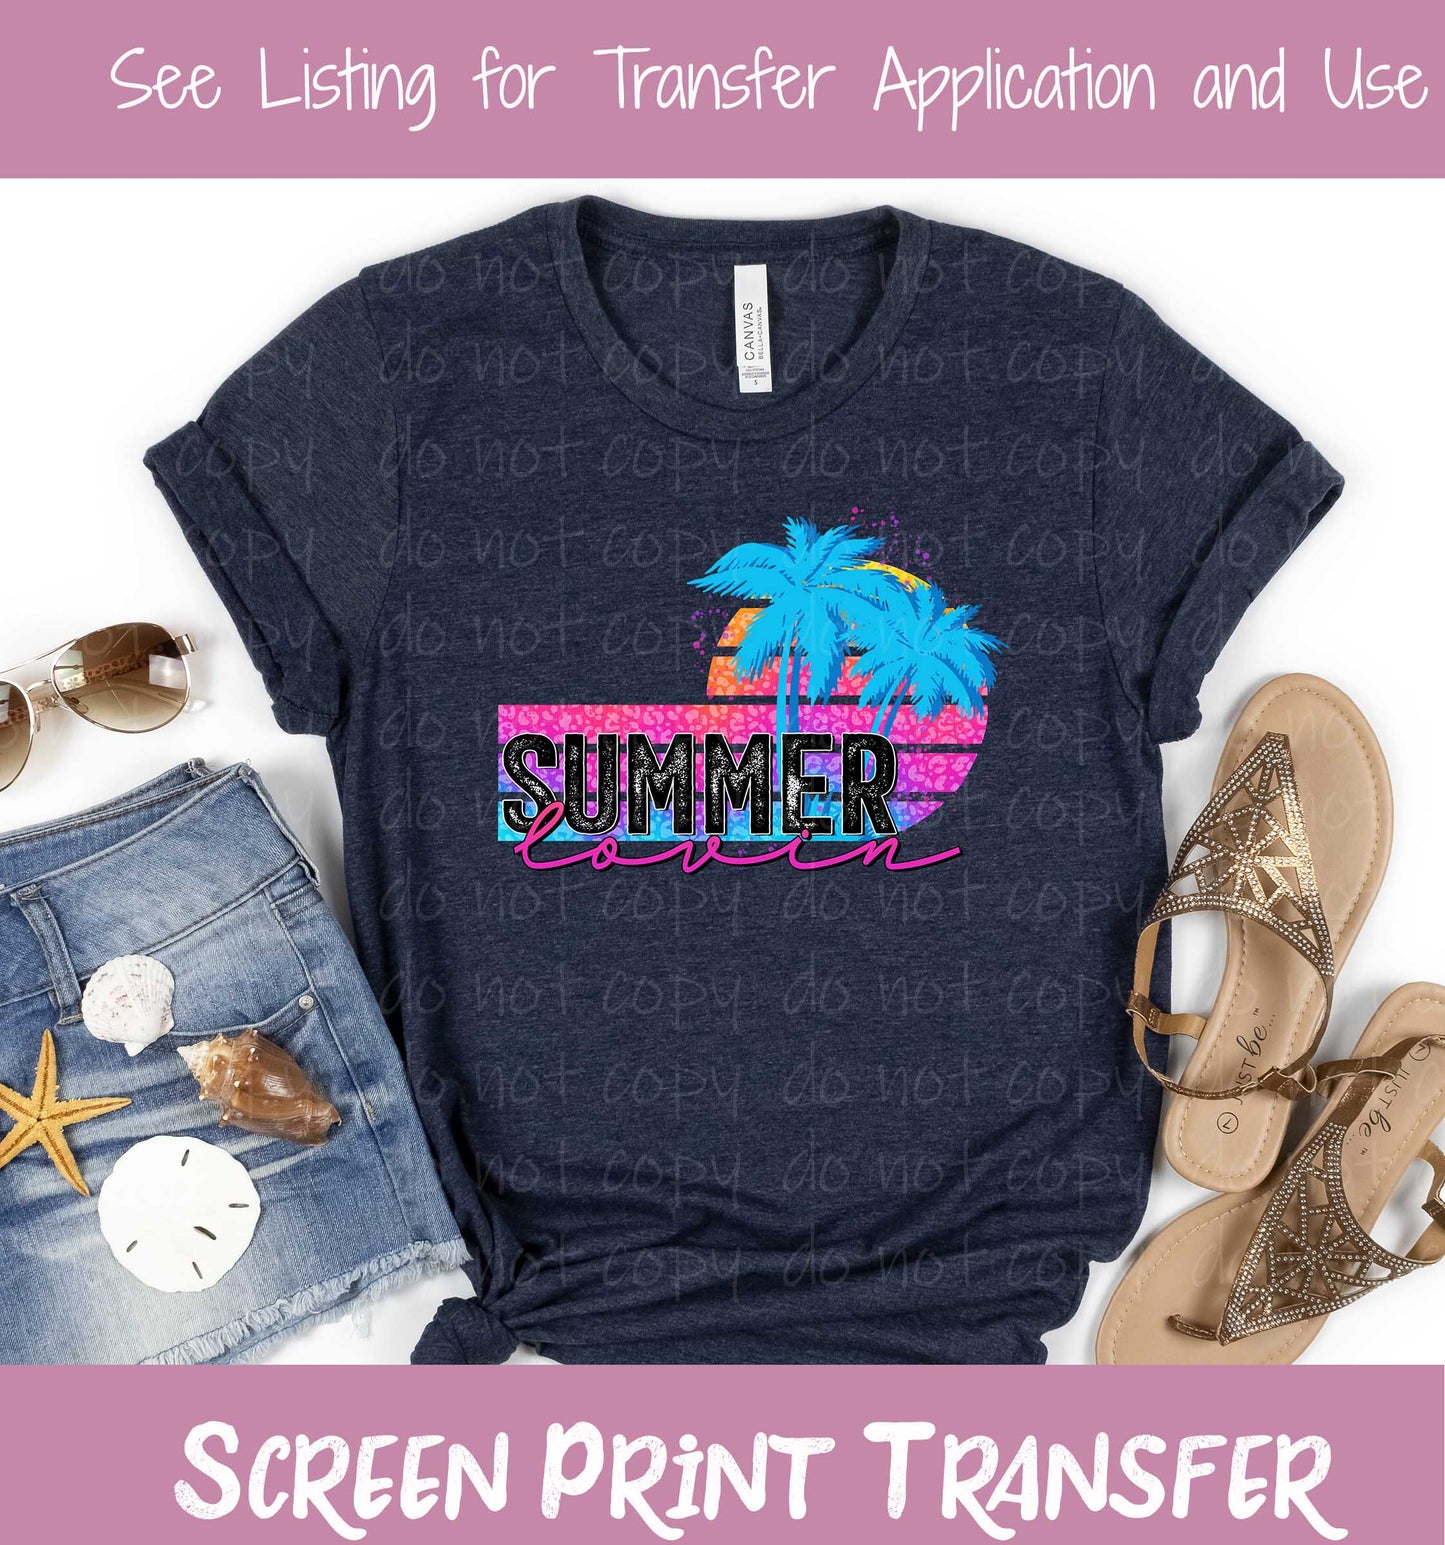 Summer Lovin HIGH HEAT Screen Print Transfer #46